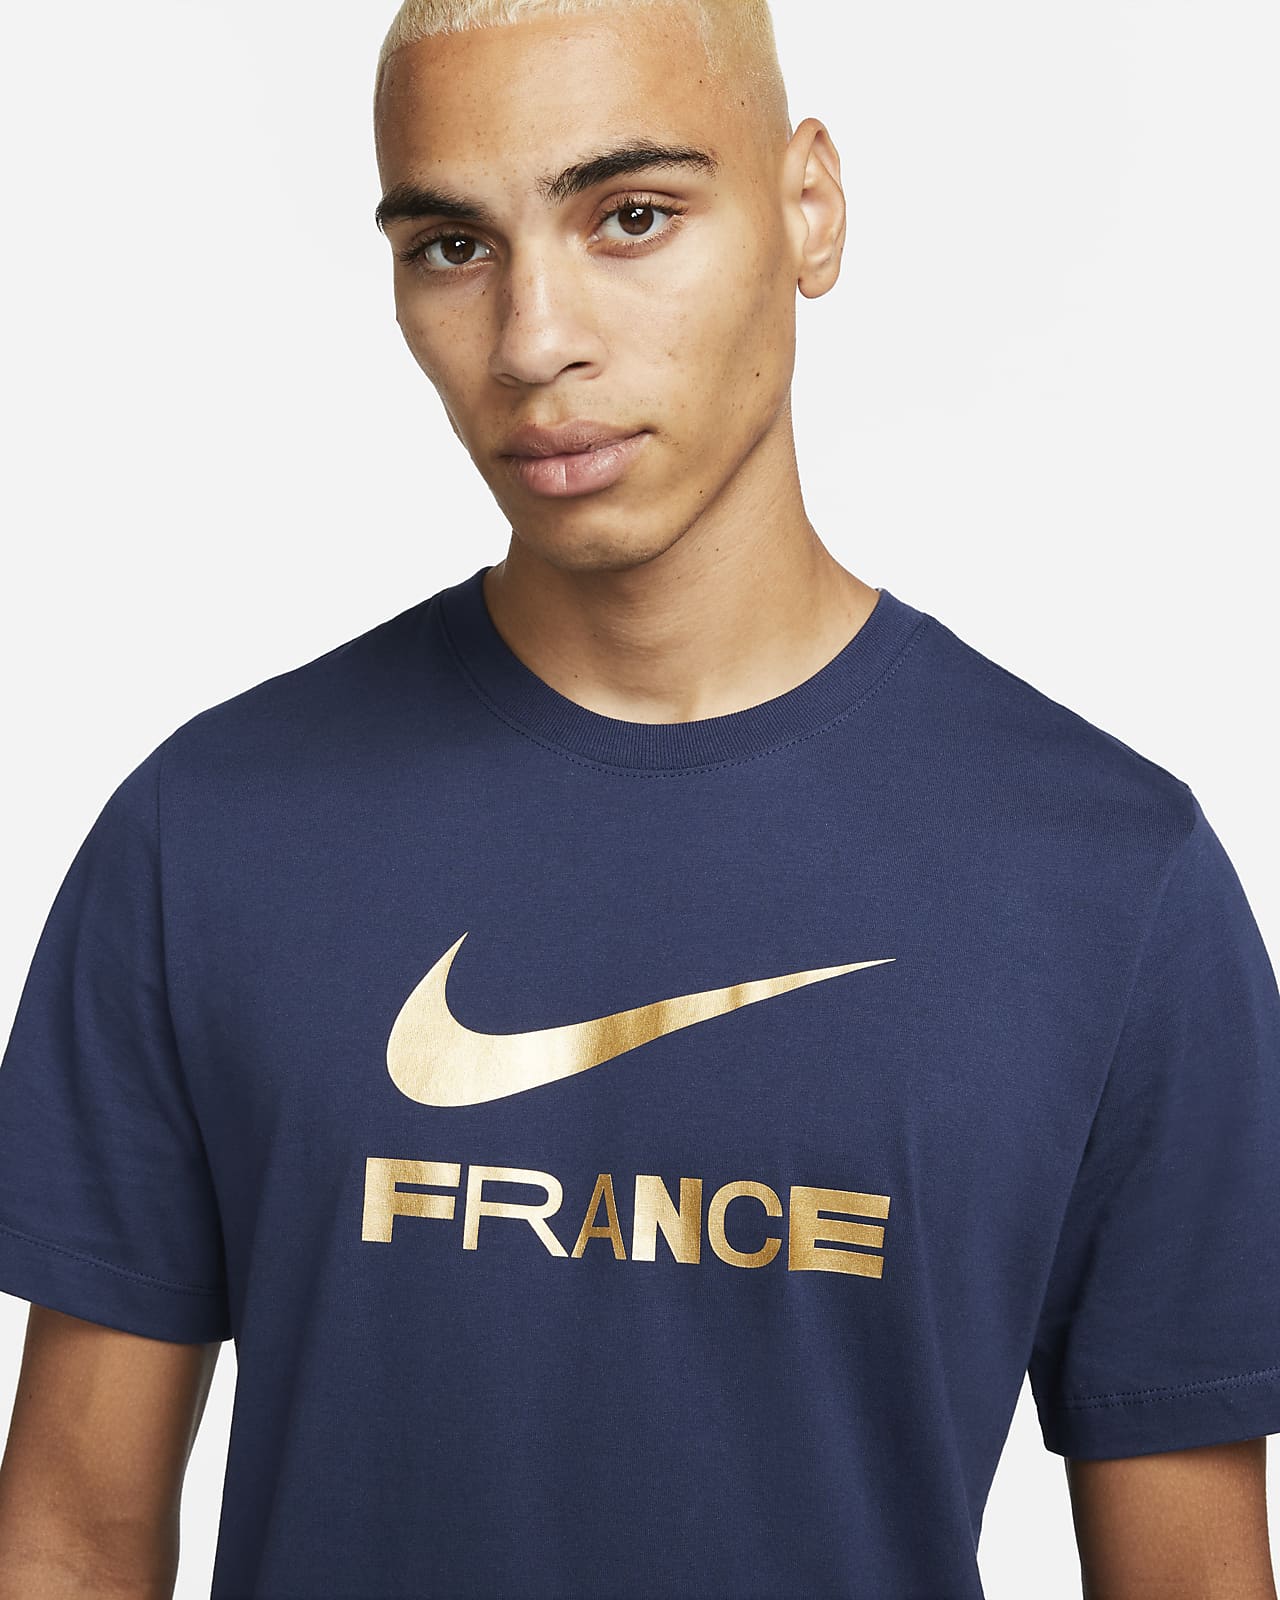 Playera para hombre Swoosh Francia. Nike.com